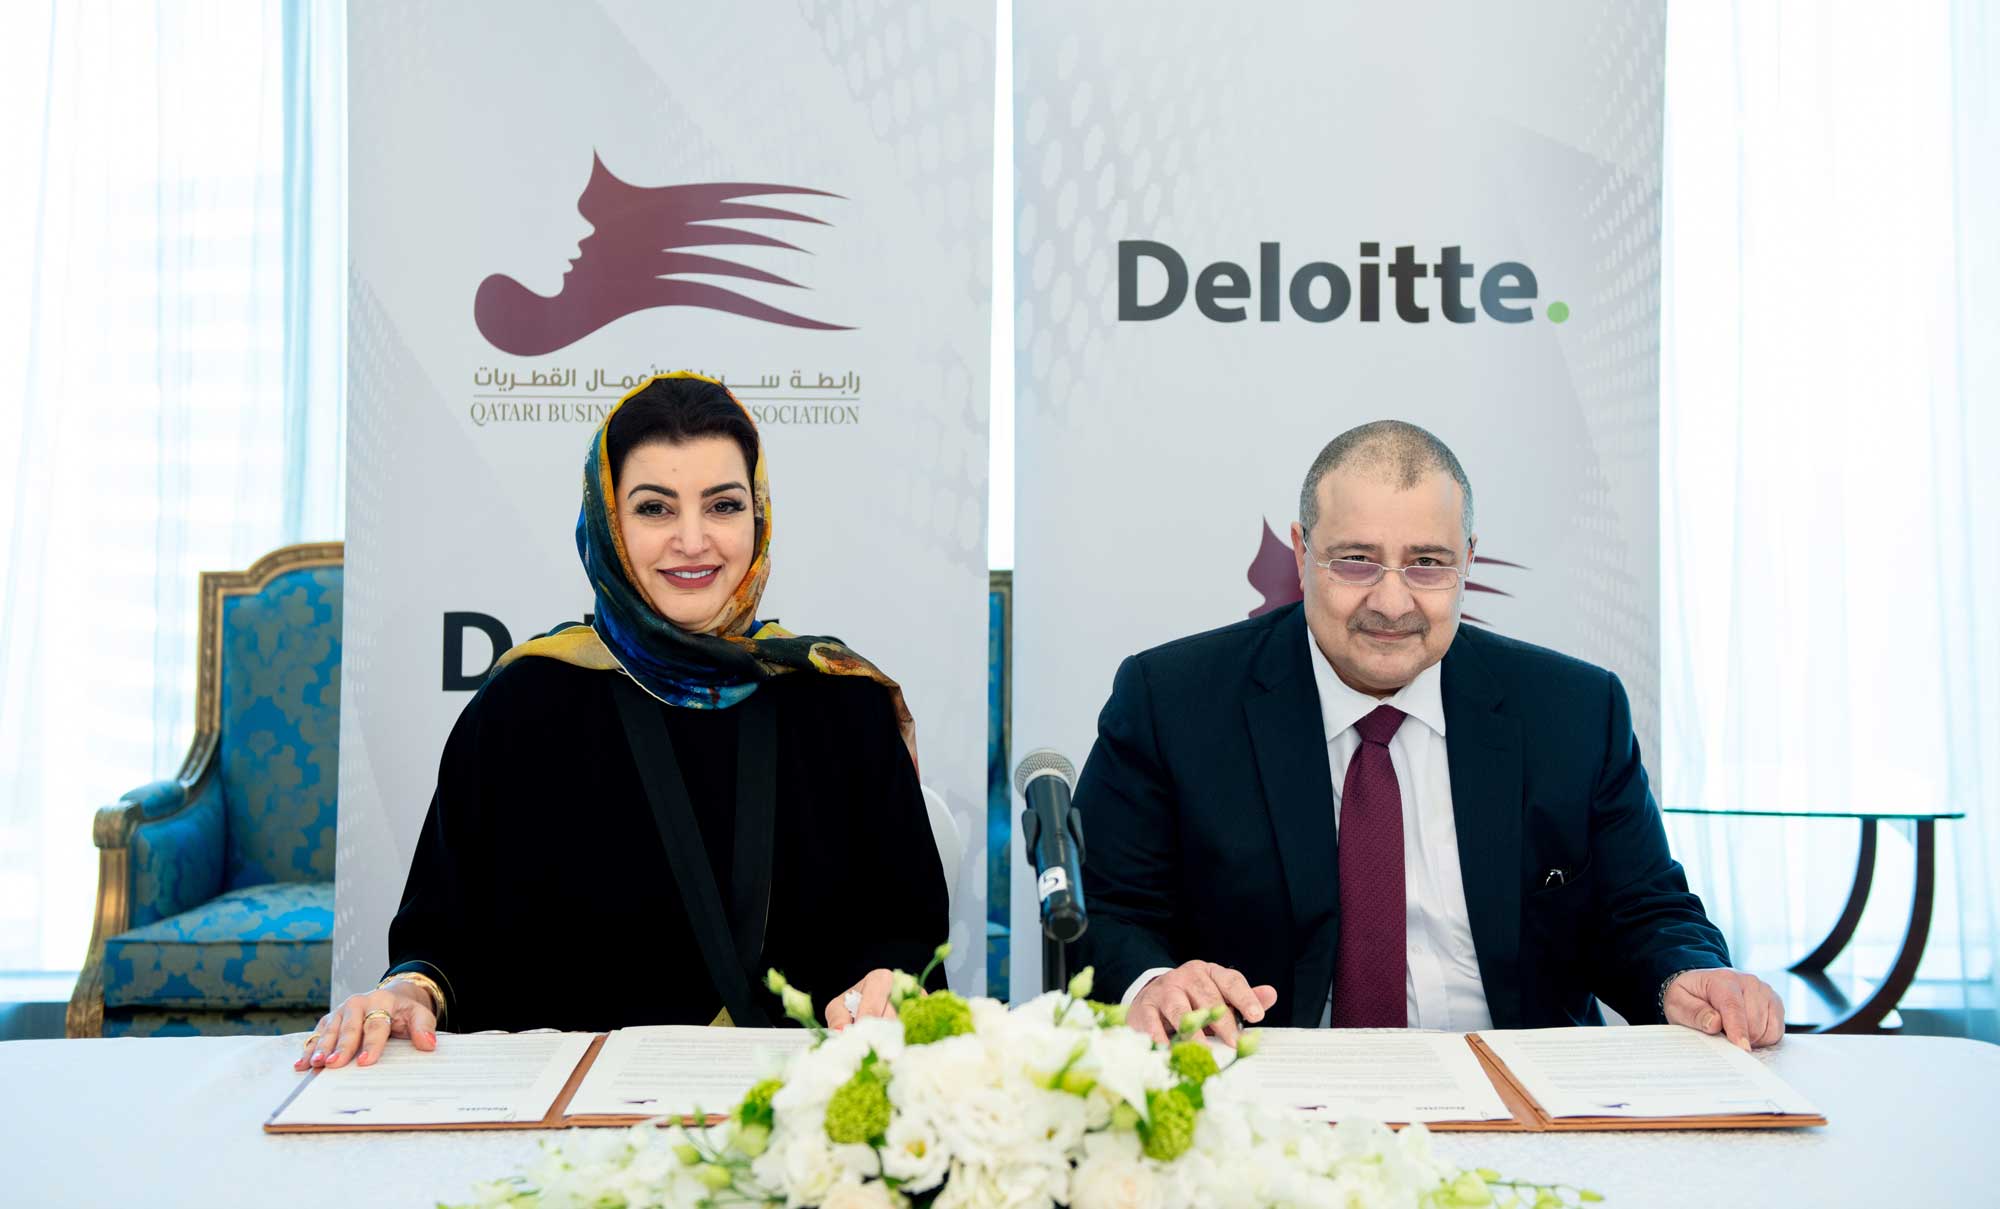 The Qatari Businesswomen Association QBWA & Deloitte sign a Partnership Agreement